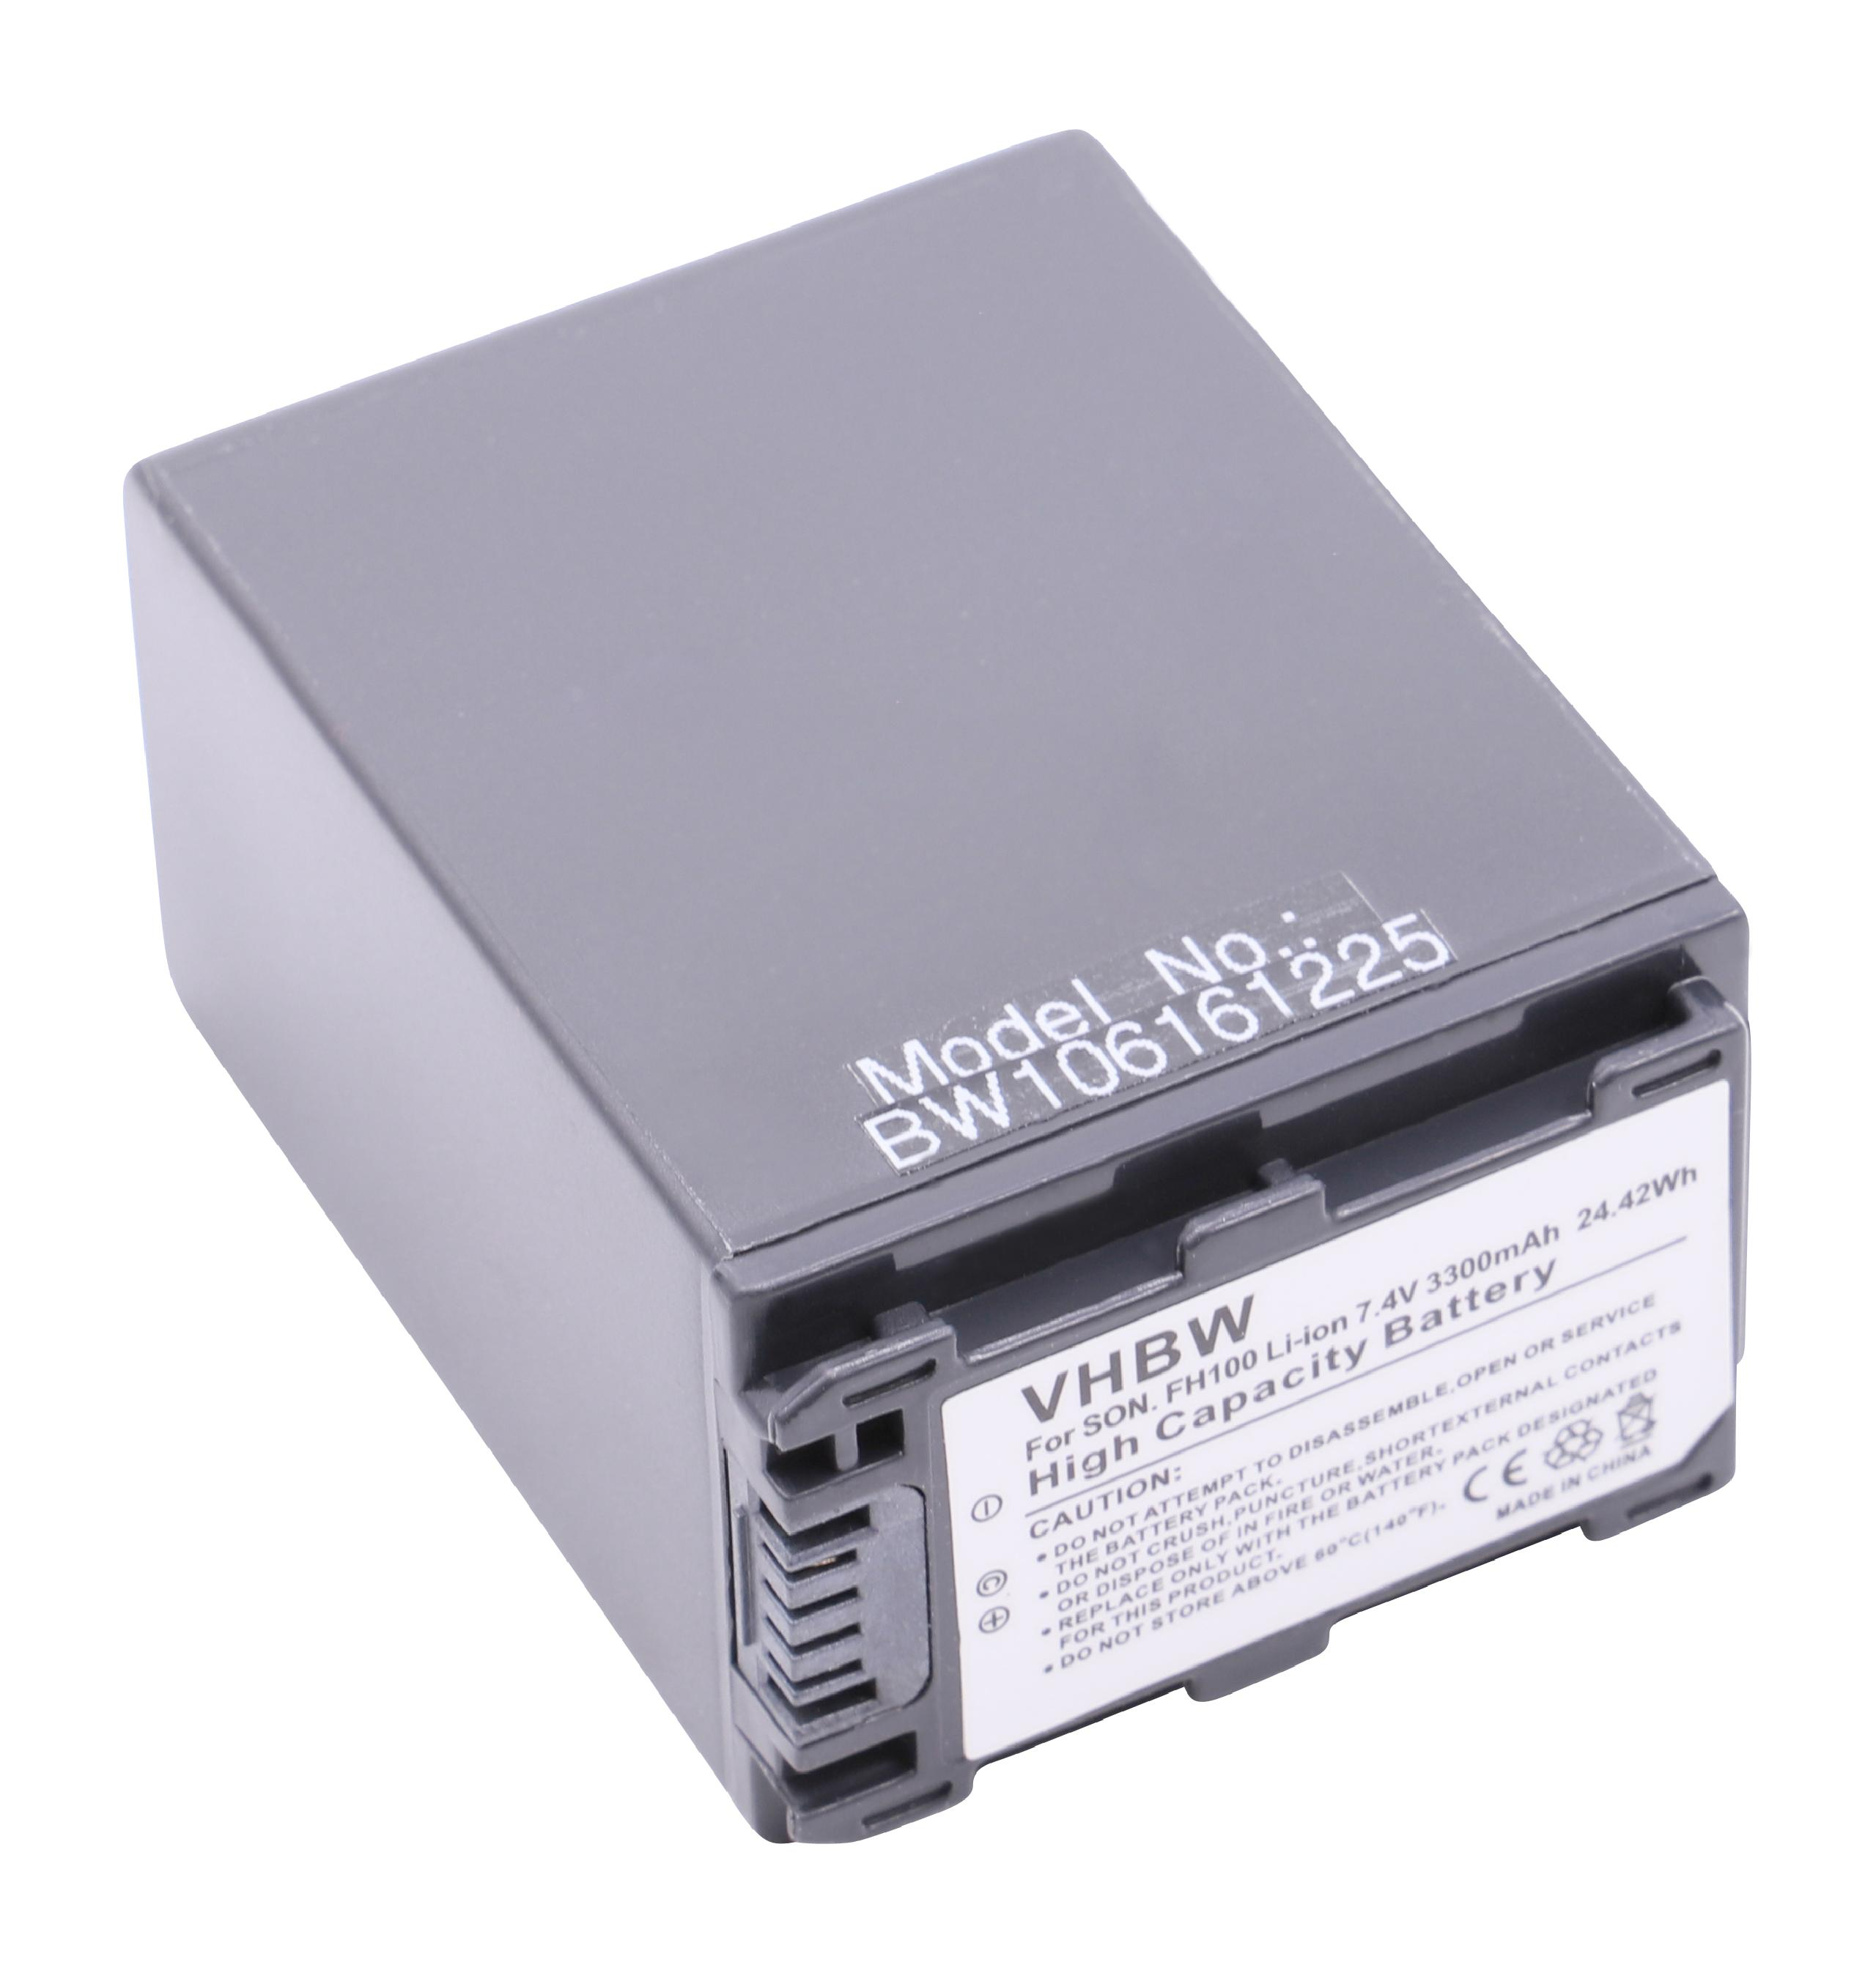 Volt, Akku 7.4 3300 VHBW Li-Ion mit DSC-HX100V, Cybershot DSC-HX200V Videokamera, DSC-HX100, - Sony kompatibel